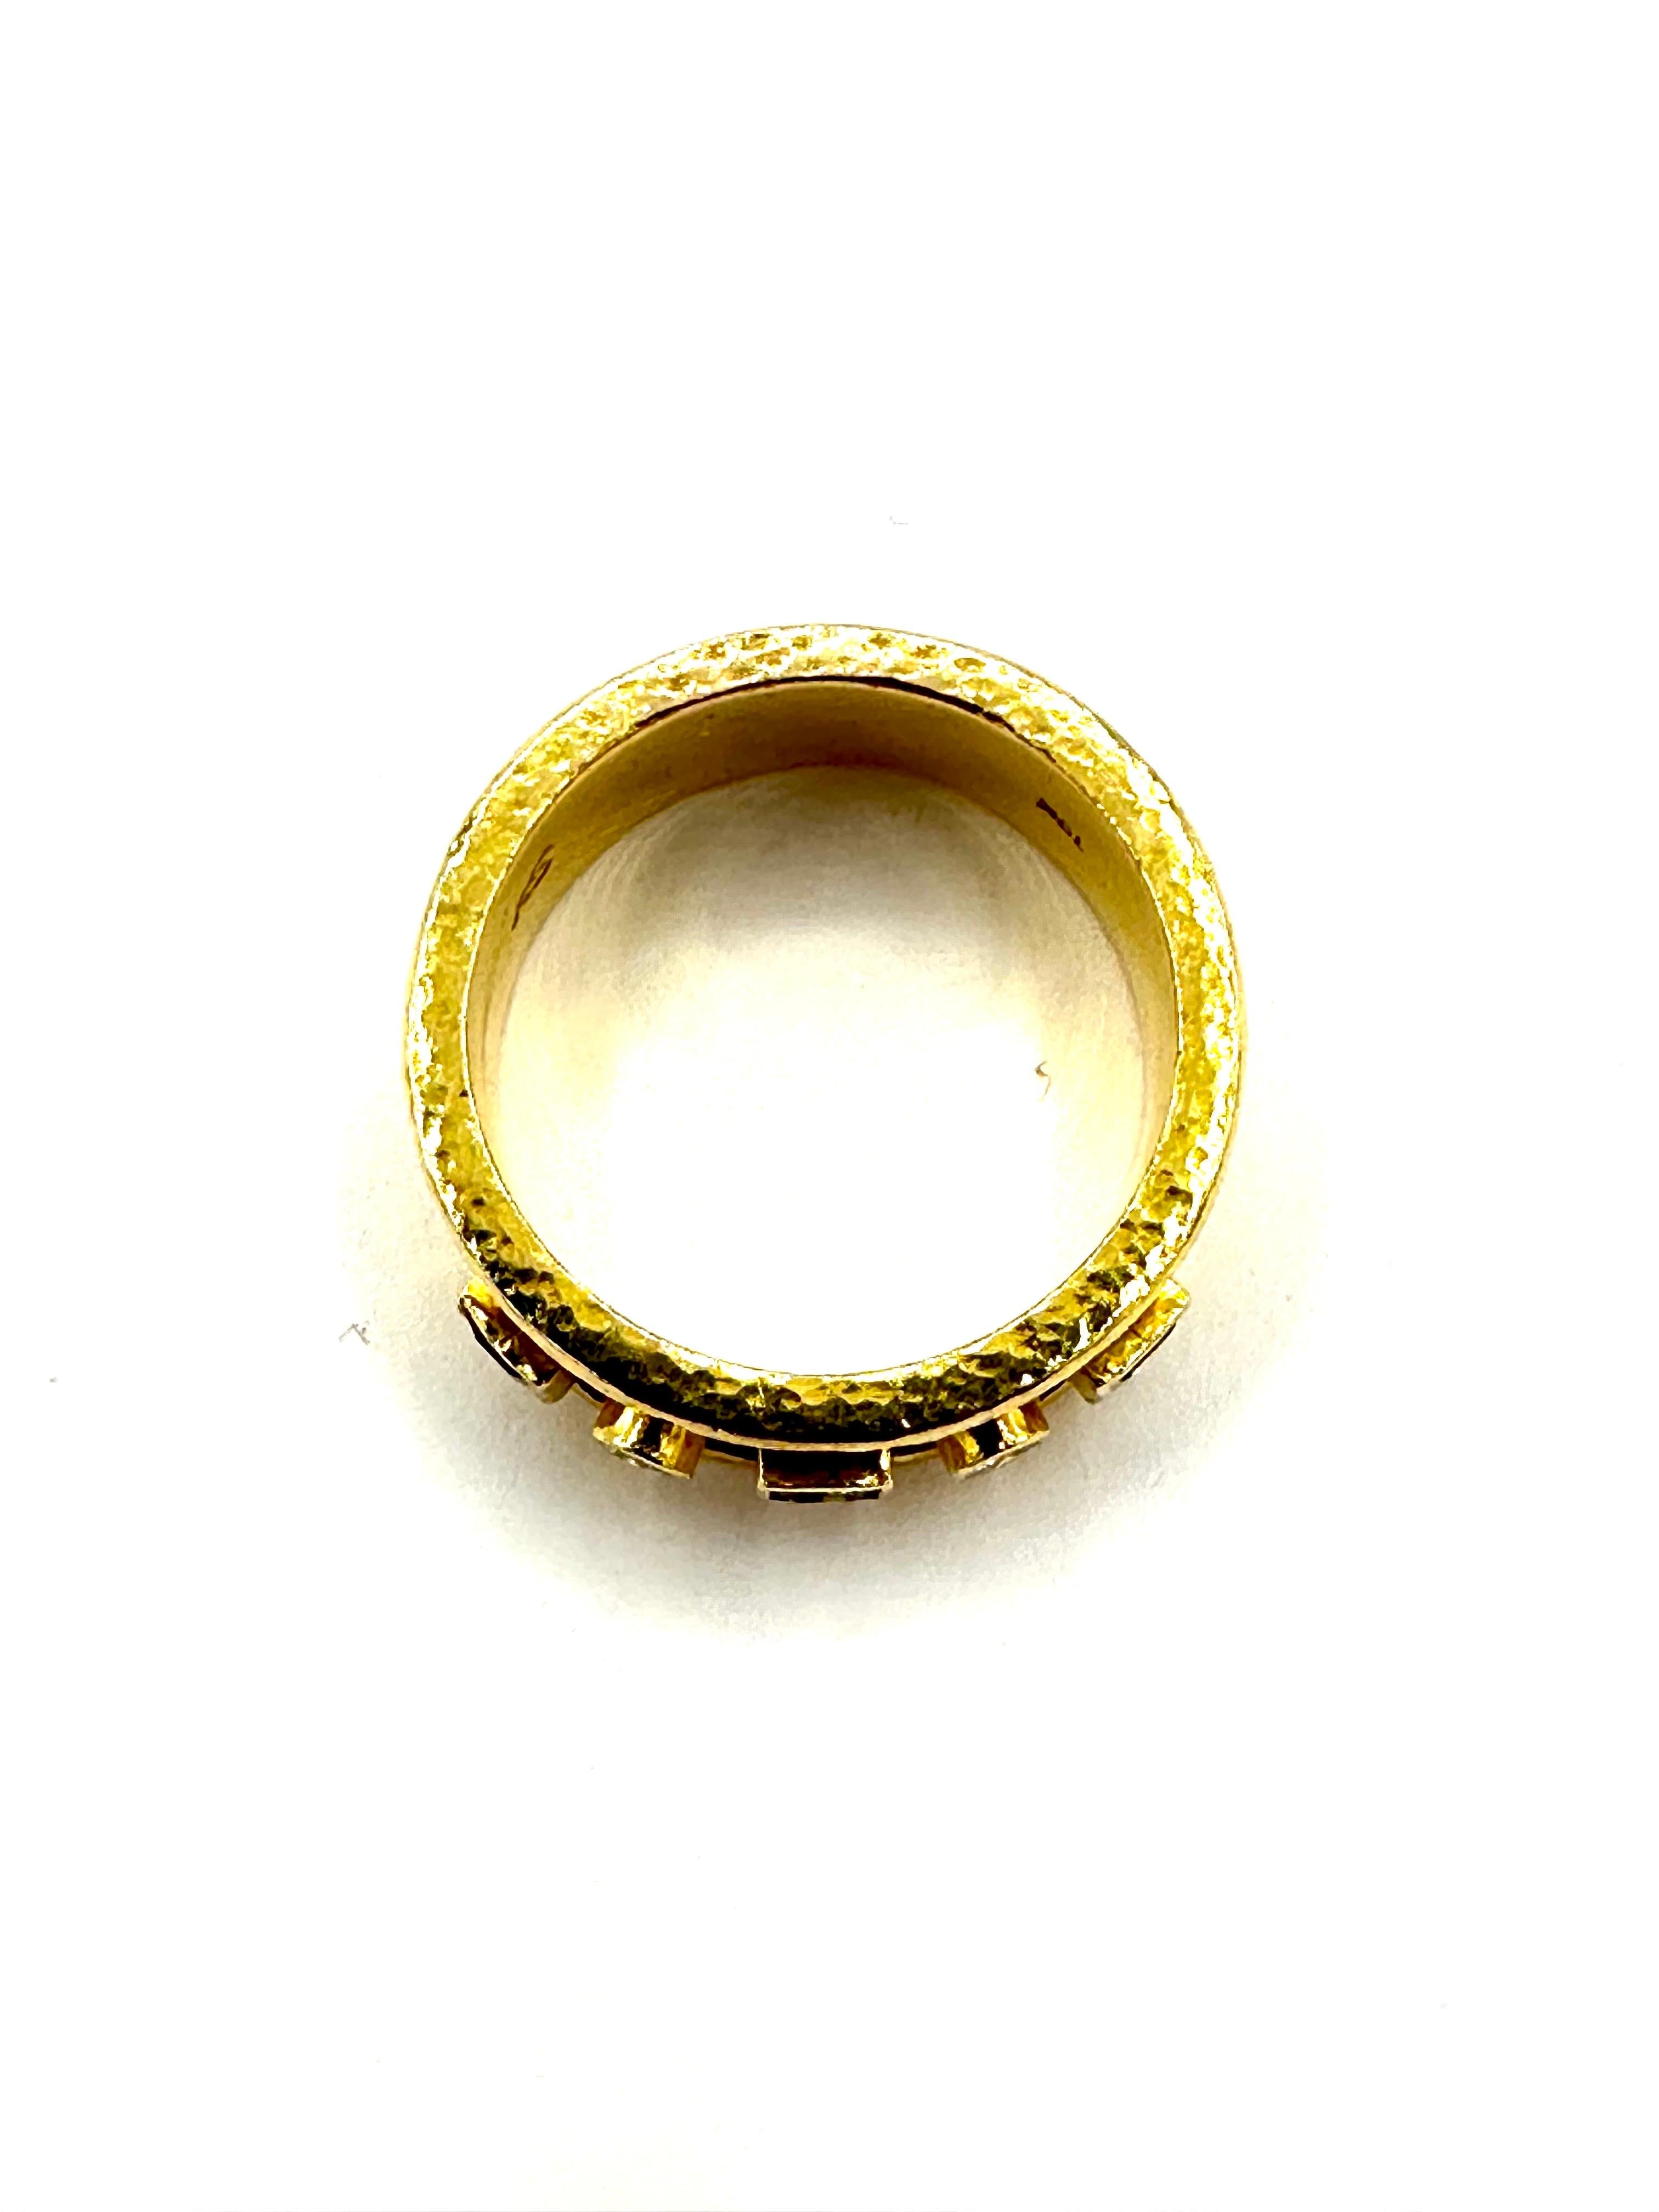 Elizabeth Locke Aquamarine and Diamond 19K Textured Yellow Gold Band Ring For Sale 2